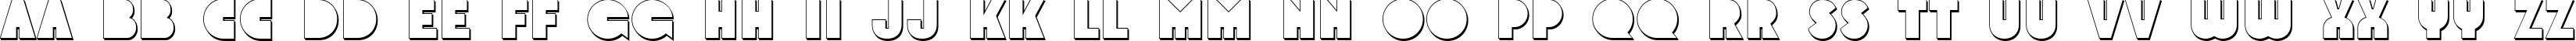 Пример написания английского алфавита шрифтом a_GrotoSh